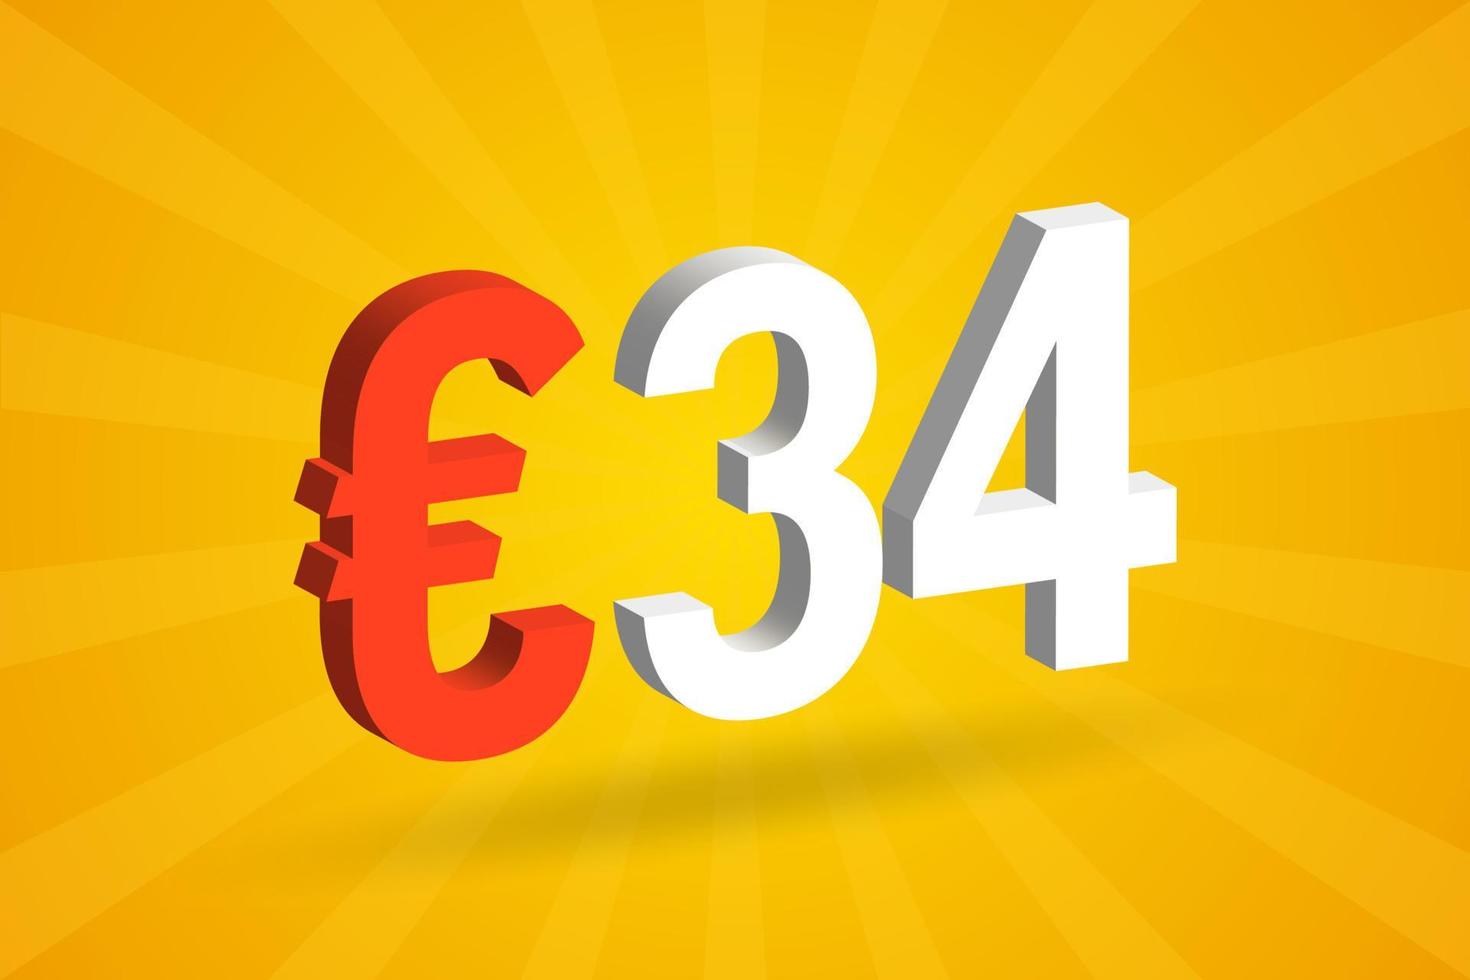 34 Euro Currency 3D vector text symbol. 3D 34 Euro European Union Money stock vector